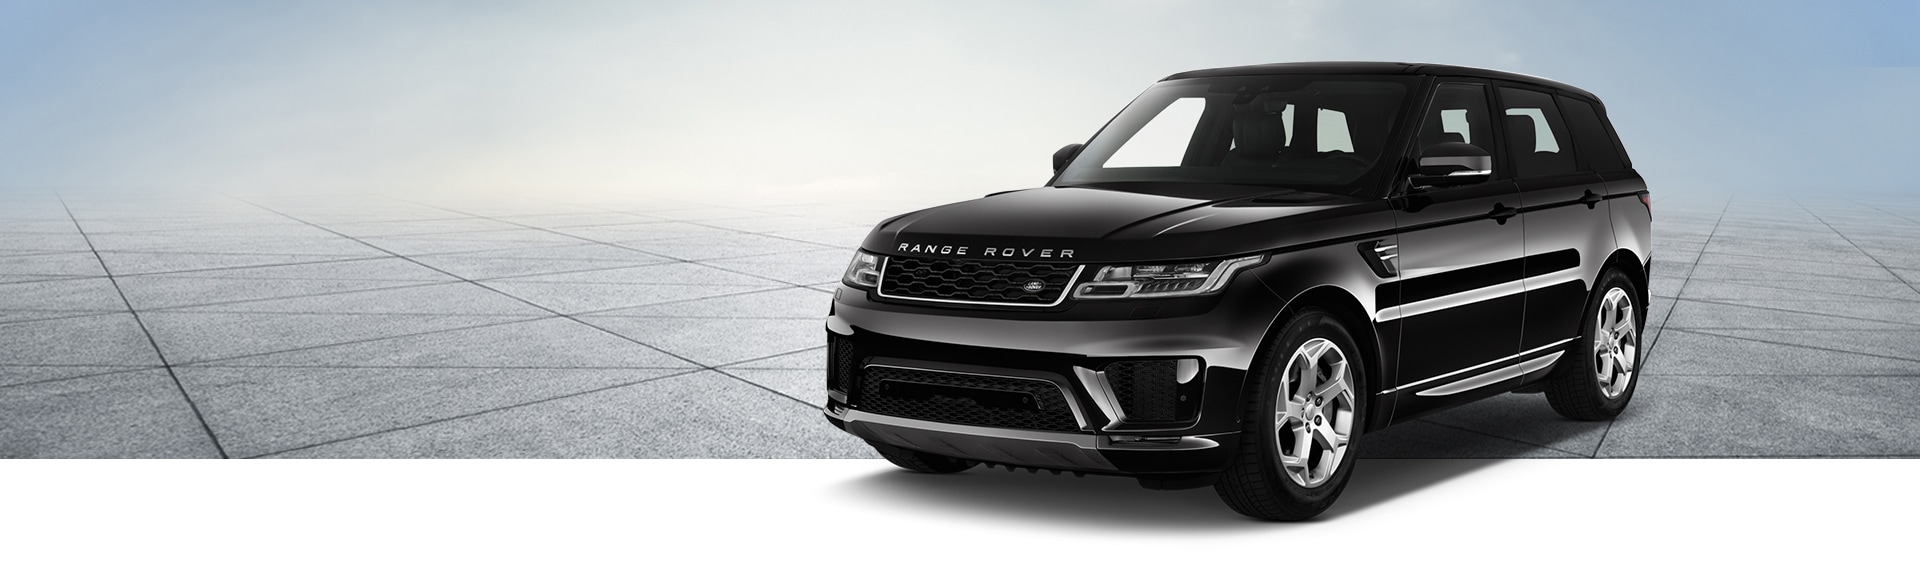 Range Rover Sport Dynamic Rental Los Angeles - Rent a Range Rover